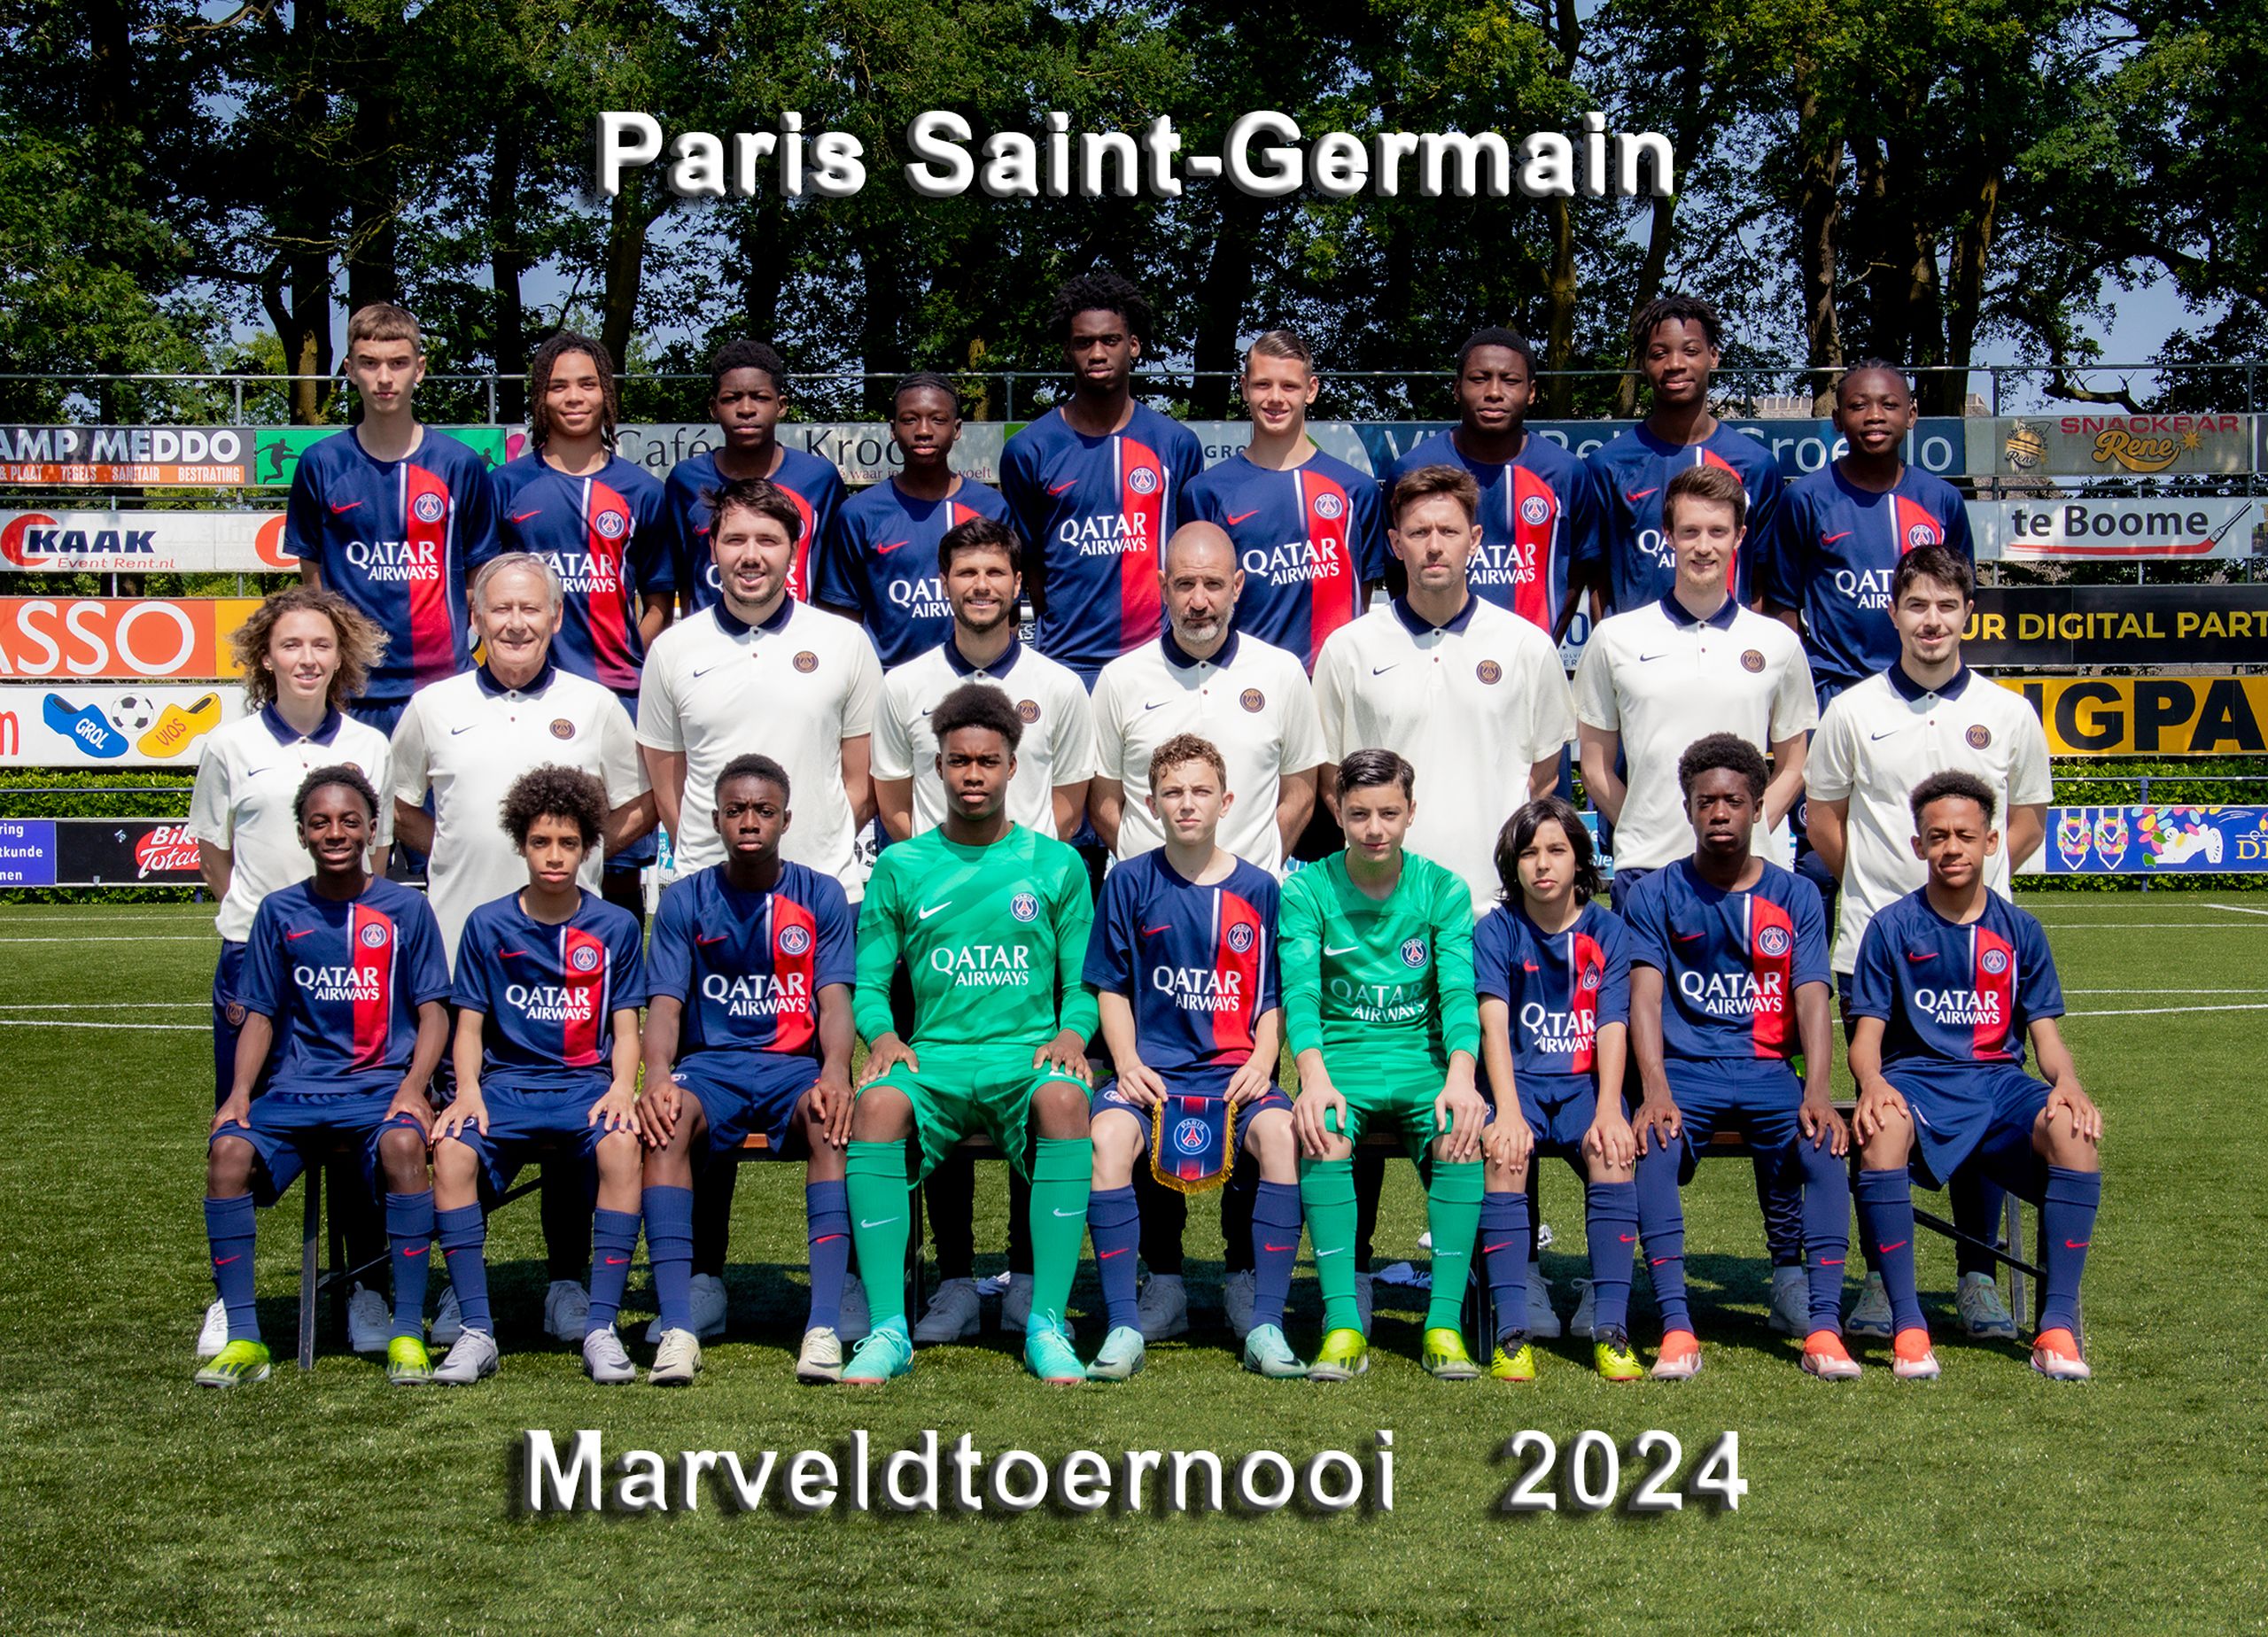 Marveld Tournament 2024 - Team Paris Saint-Germain